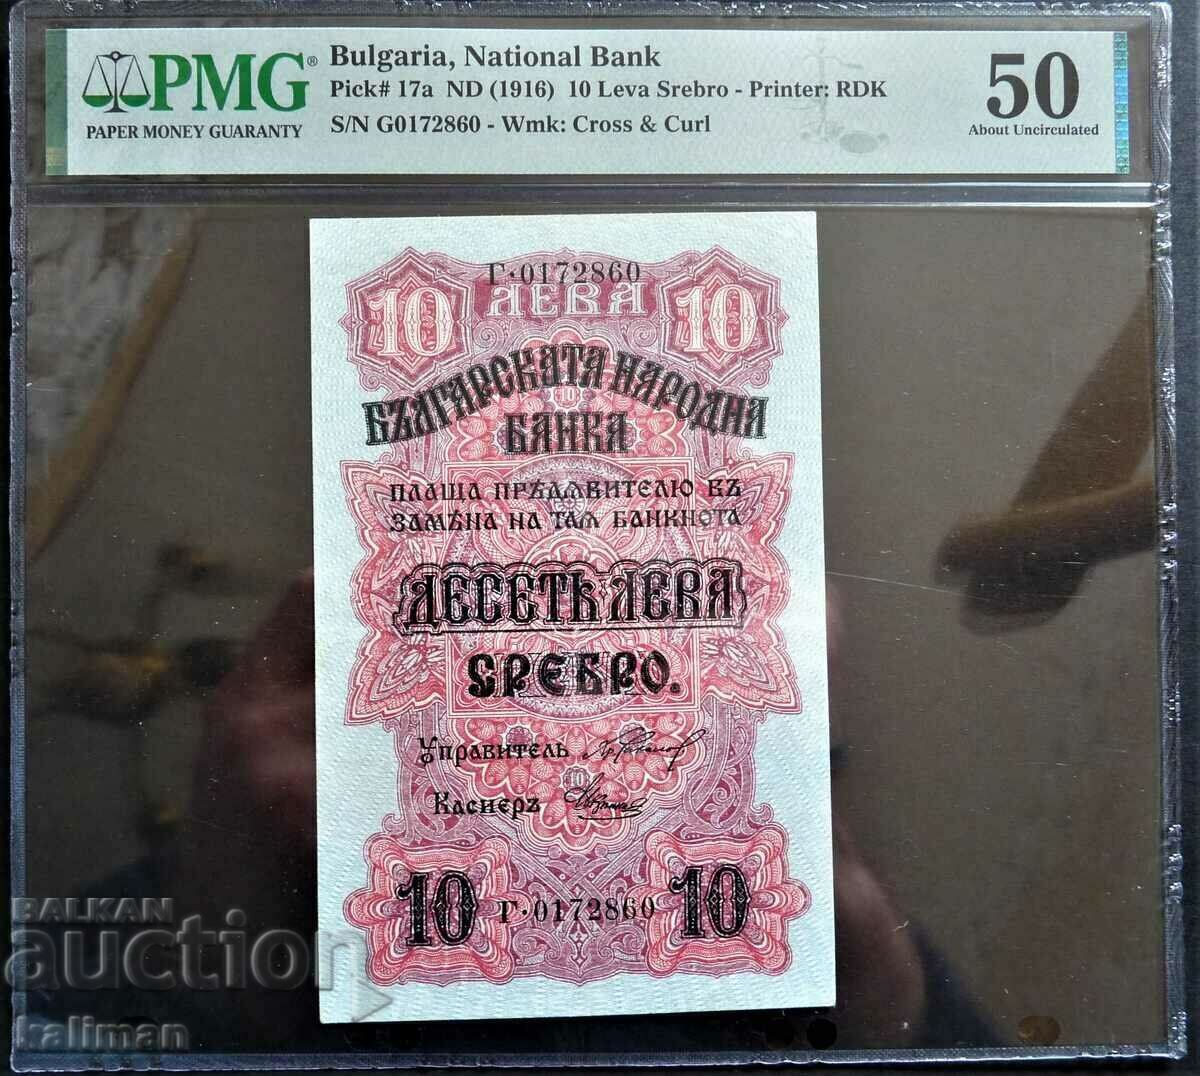 bancnota 10 BGN argint 1916 PMG AUNC 50